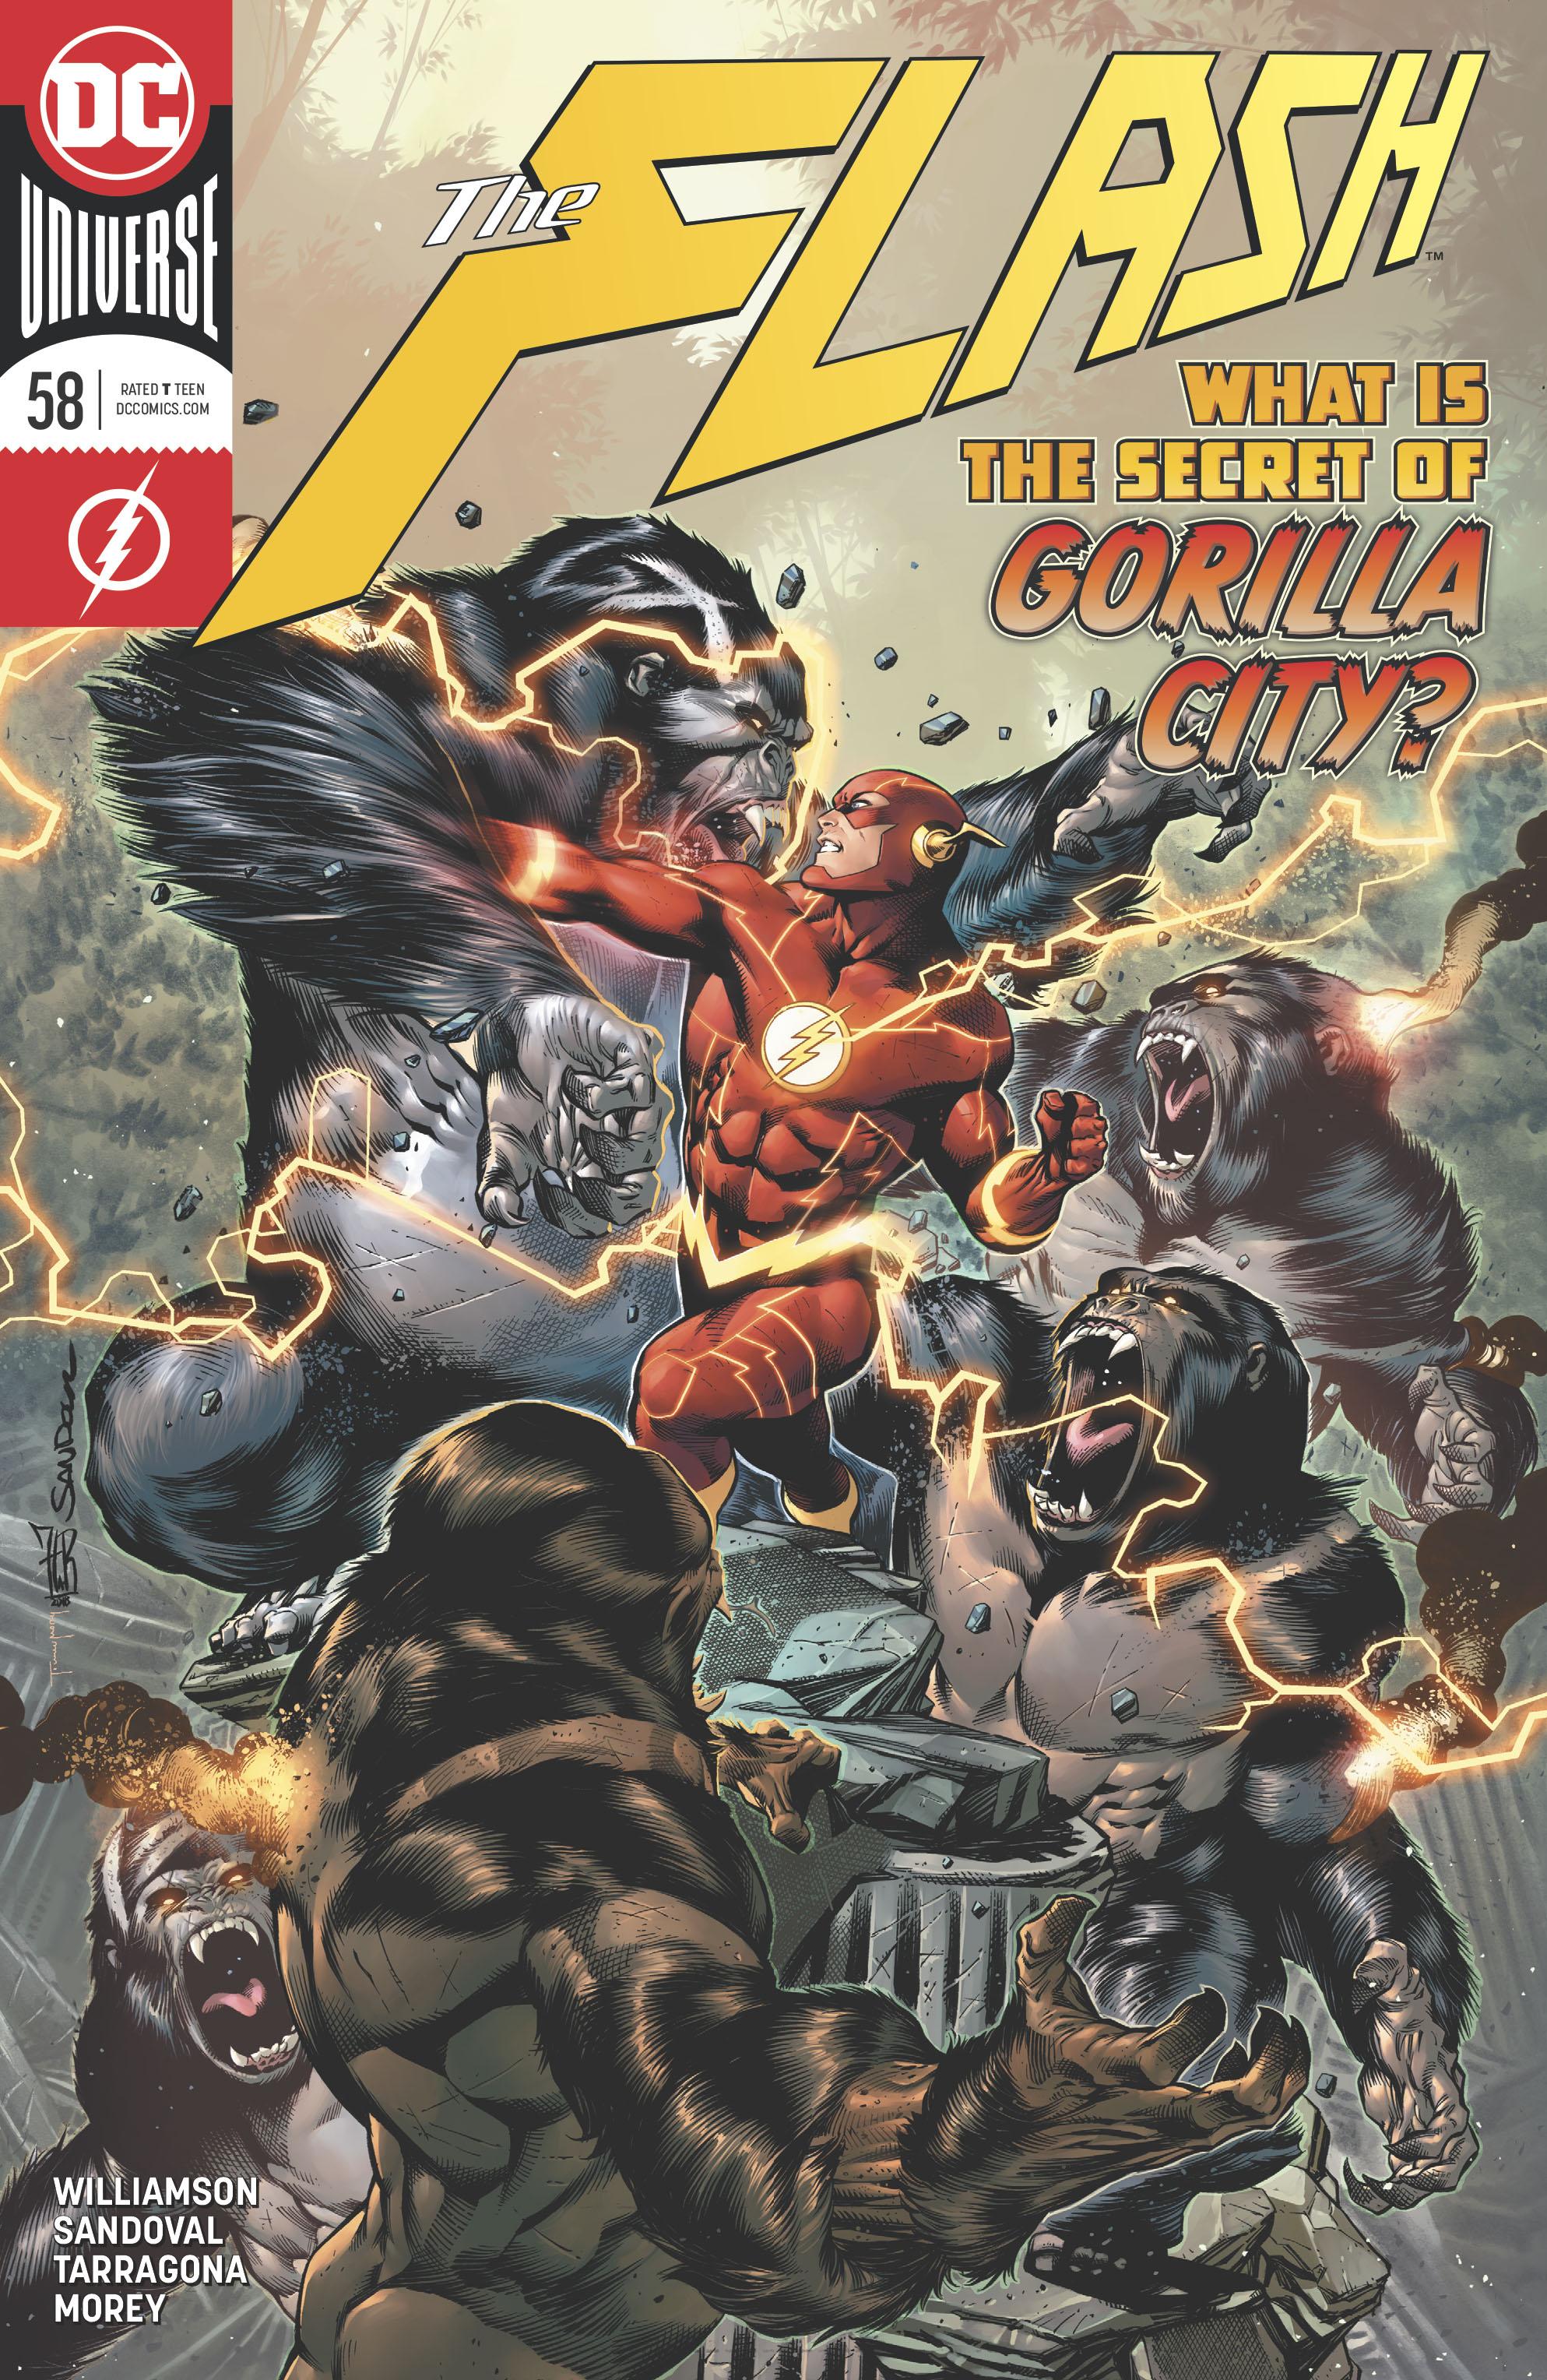 The Flash Vol. 5 #58